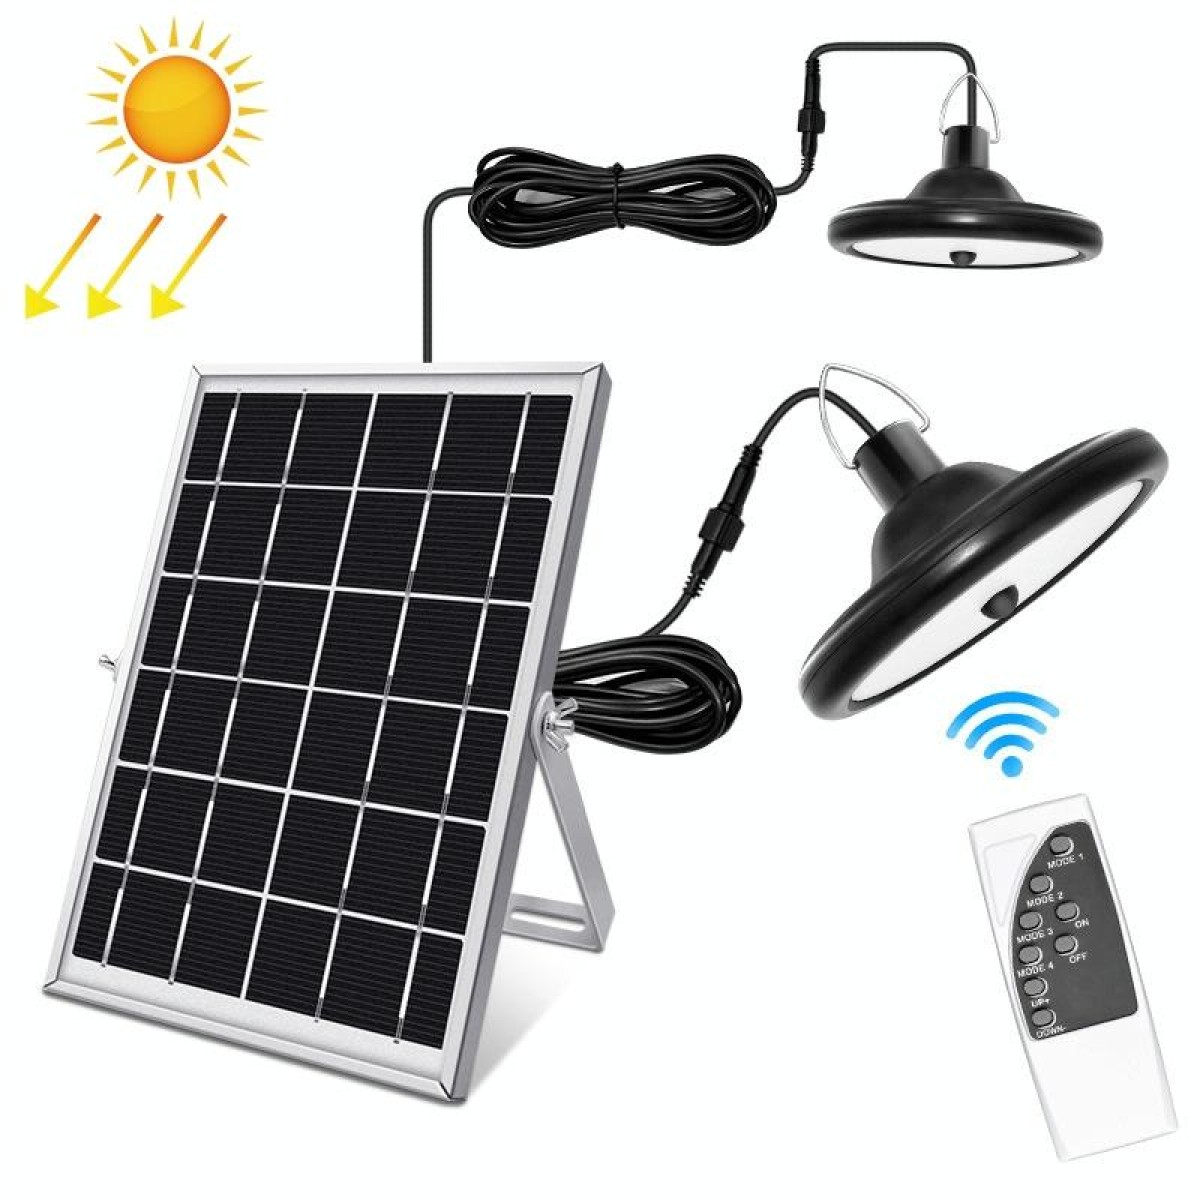 Smart Induction 2 in 1 112LEDs Solar Light Indoor and Outdoor Garden Garage LED Lamp, Light Color:White Light(Black)